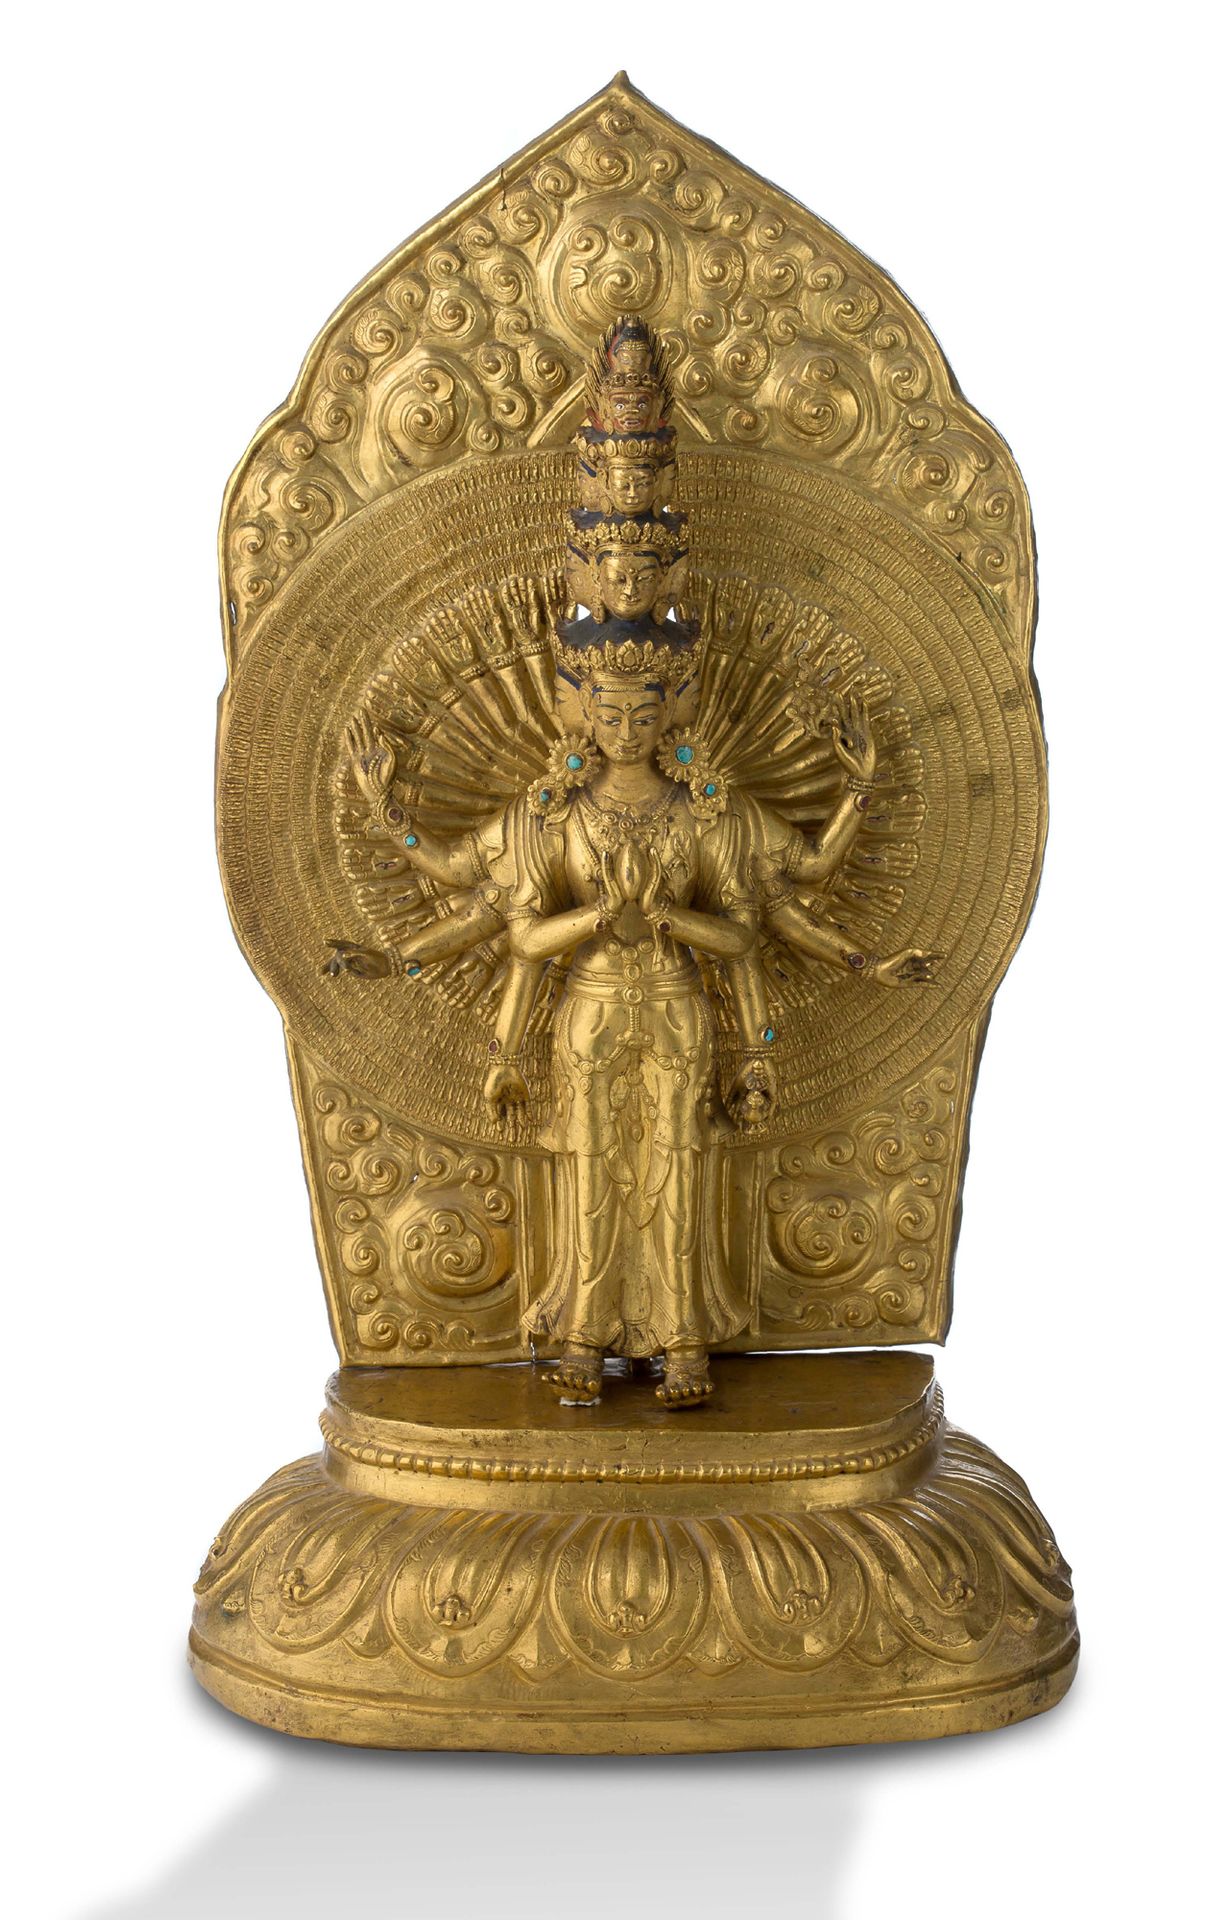 TIBET XVIIIe - XIXe SIÈCLE = 西藏地区 18-19世纪
十一面千手观音镀金铜像